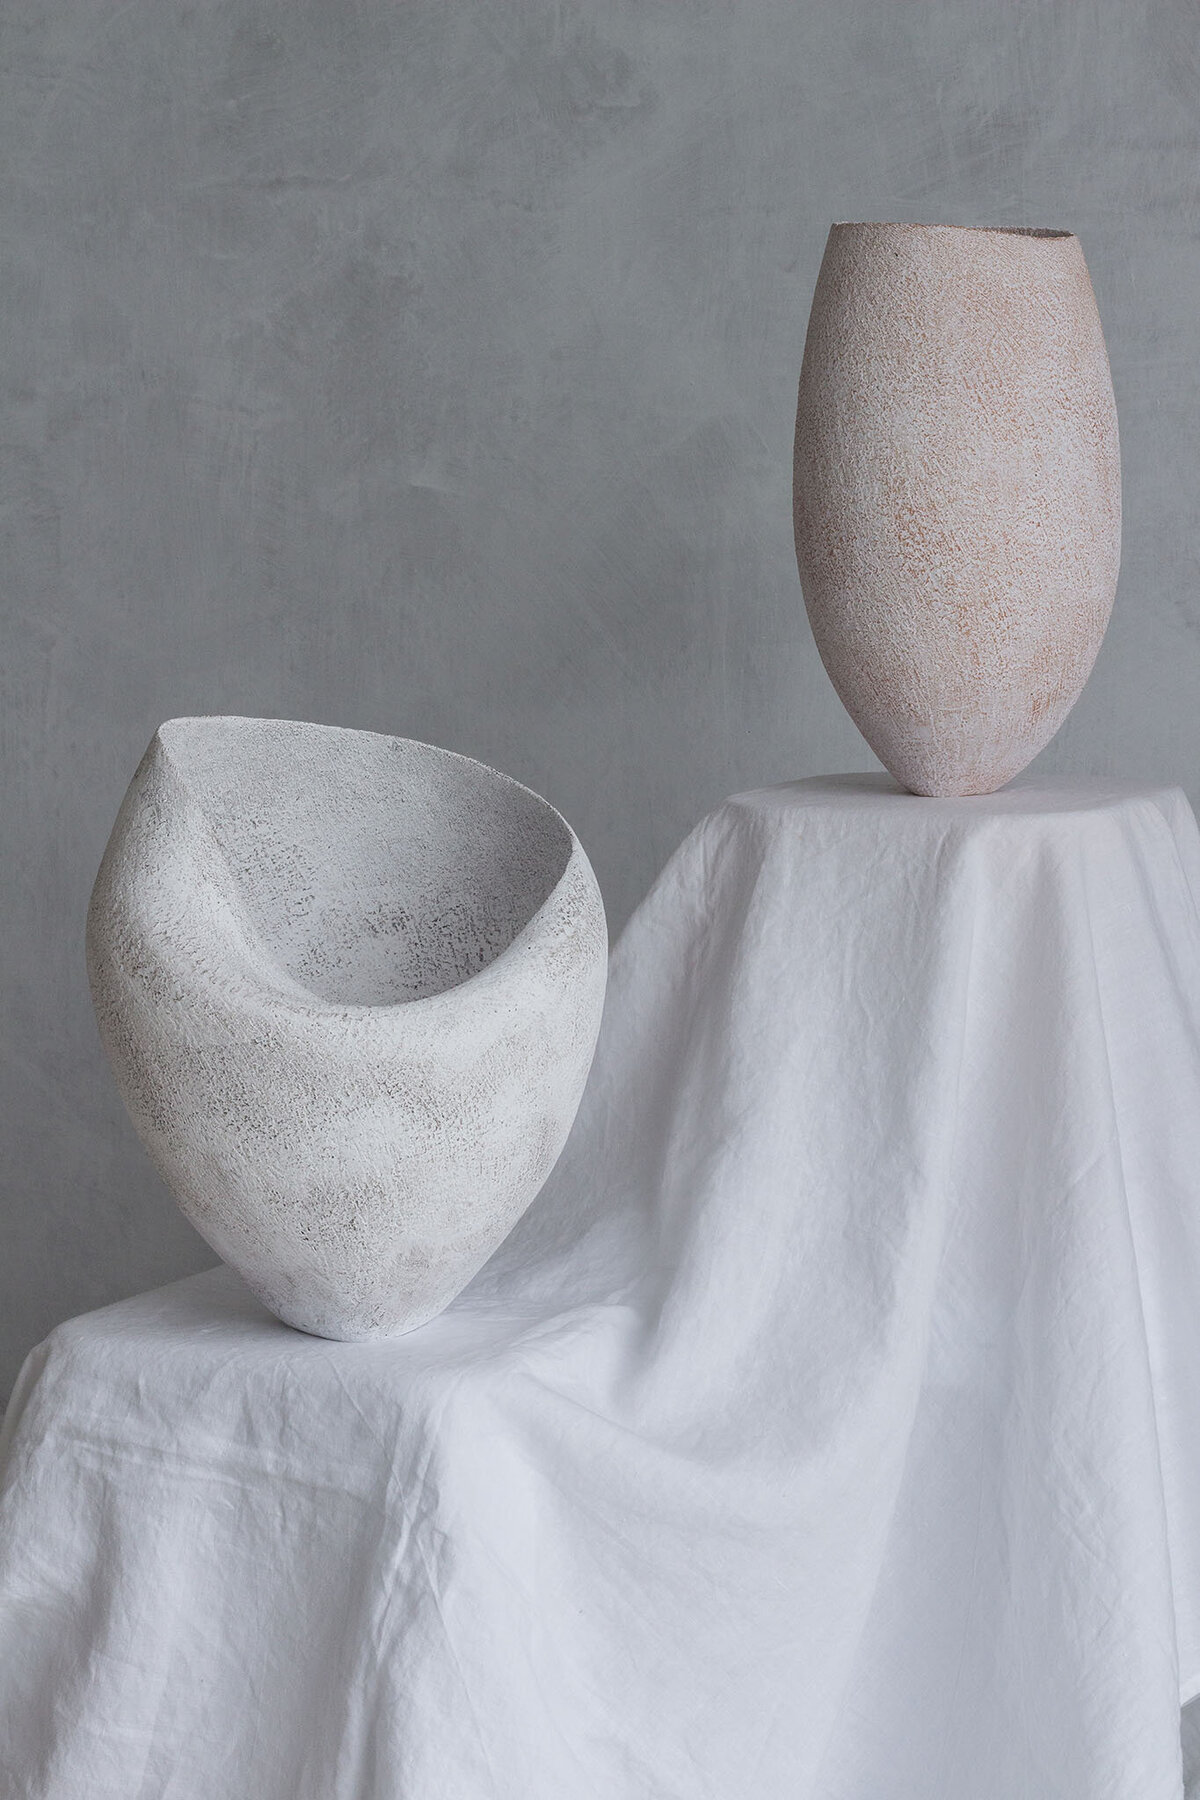 Yasha-Butler-Ceramic-Lithic-Collection-Pergamon-Caria-01-2022-8-2048px